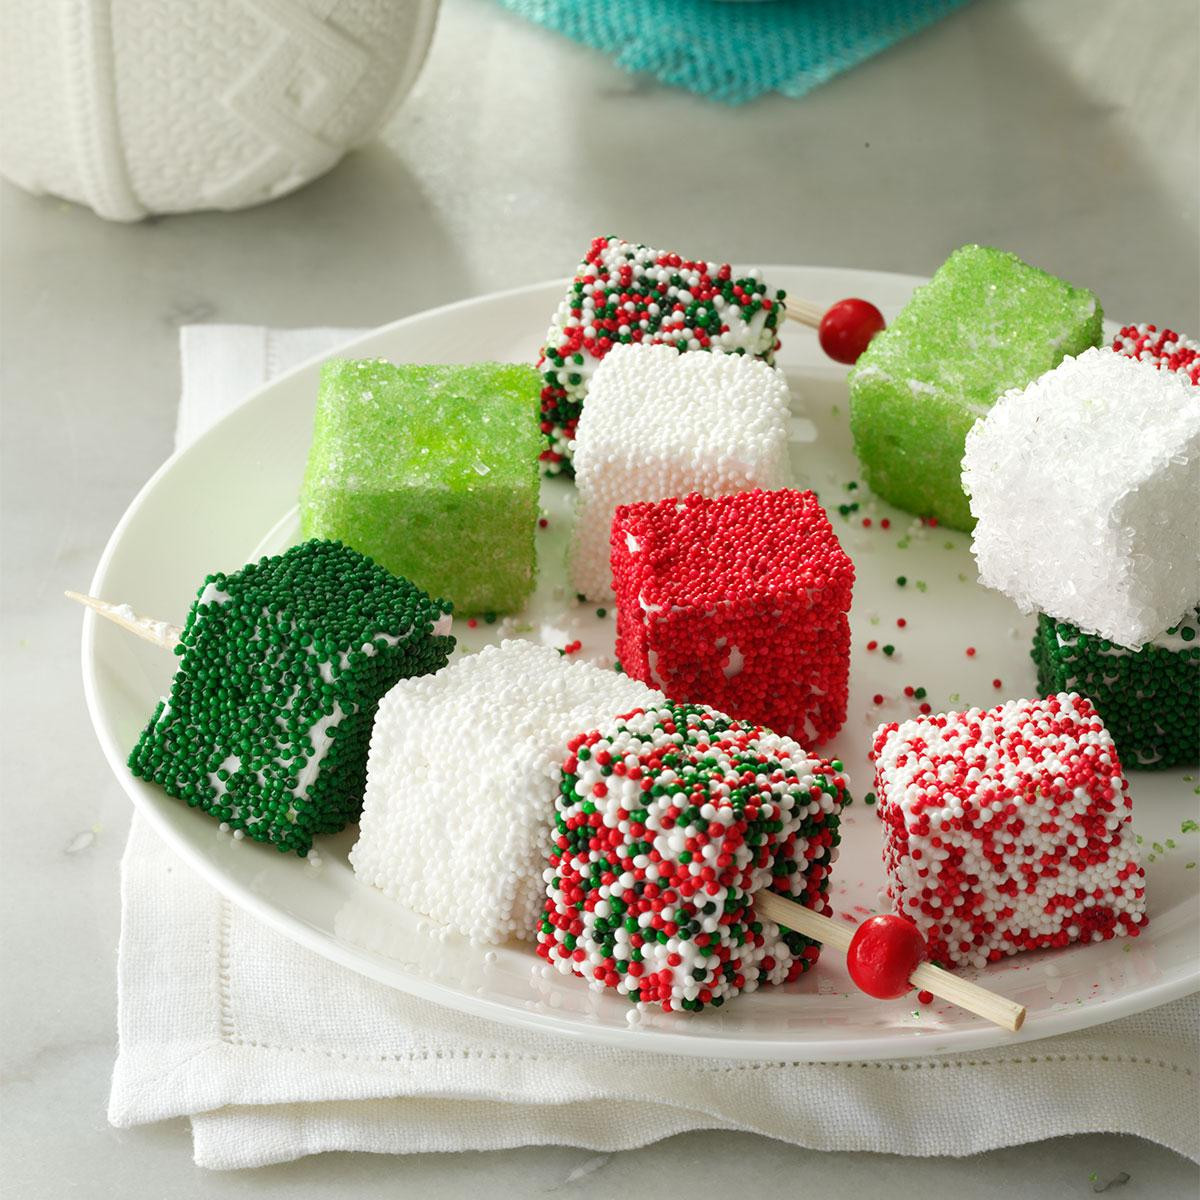 Easy Christmas Candy To Make
 Homemade Holiday Marshmallows Recipe